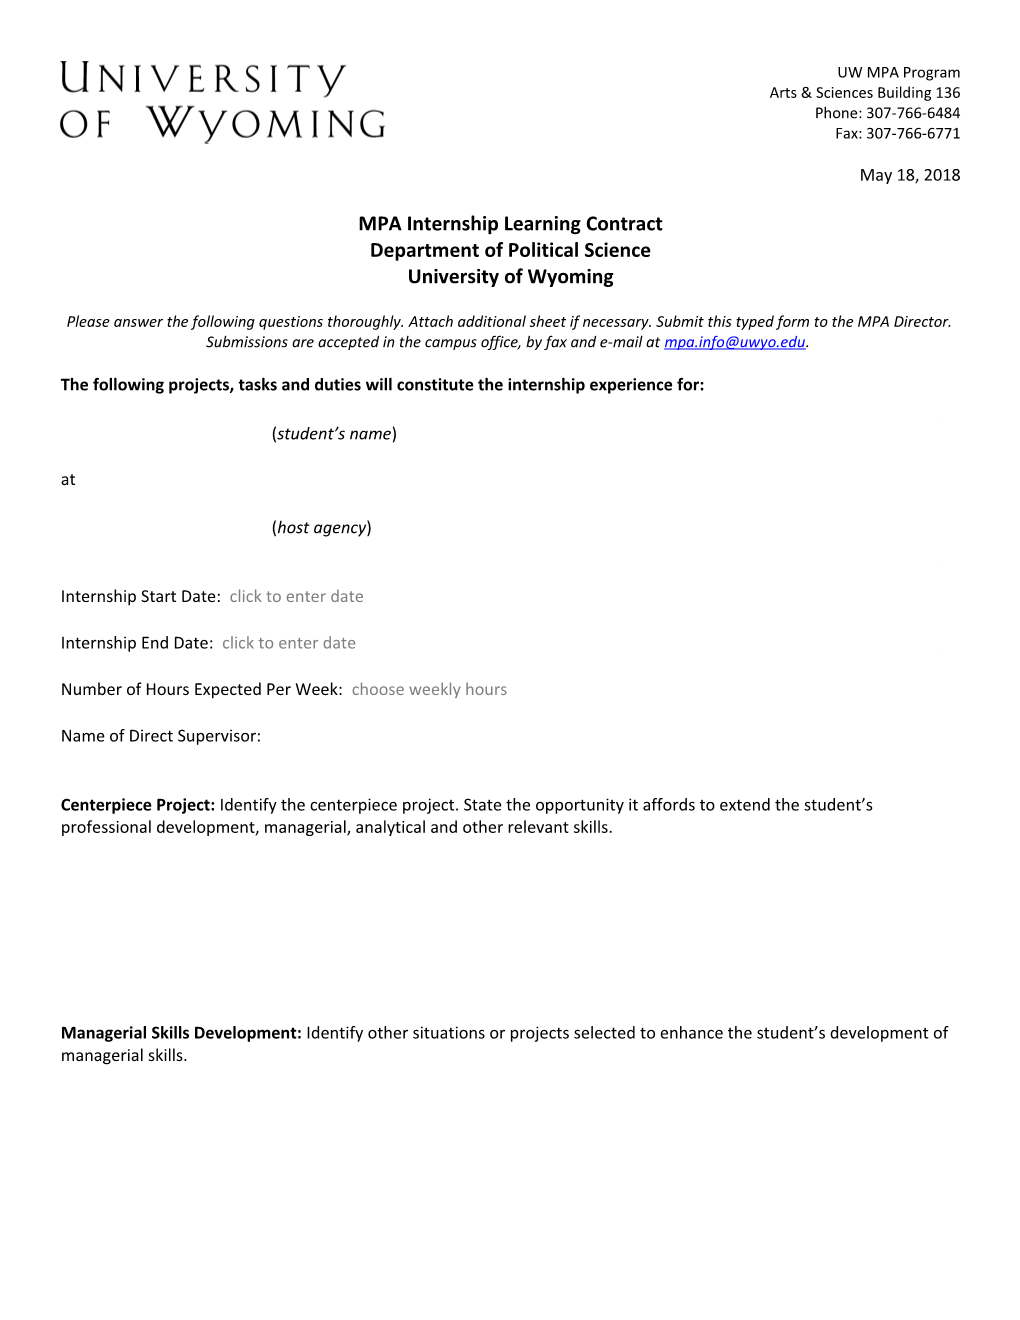 MPA Internship Learning Contract